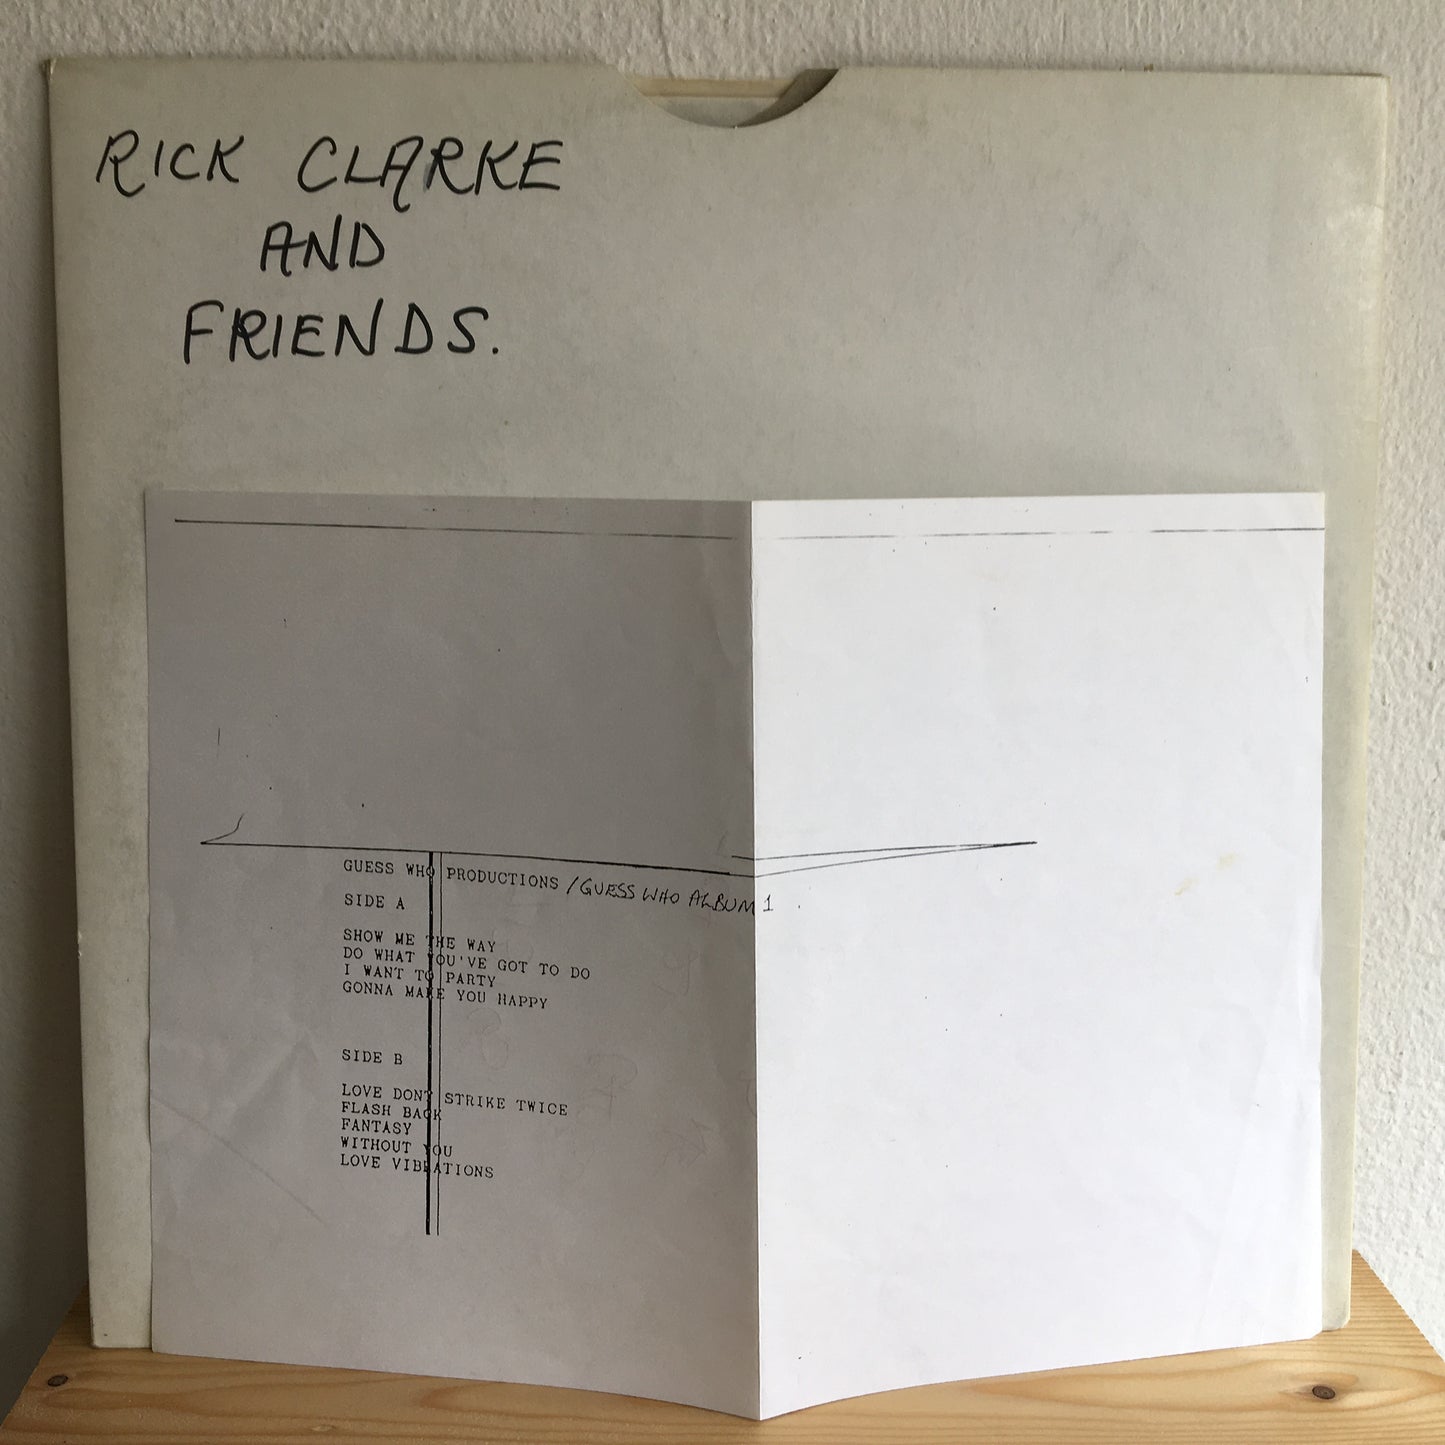 Rick Clarke – Guess Who LP 1